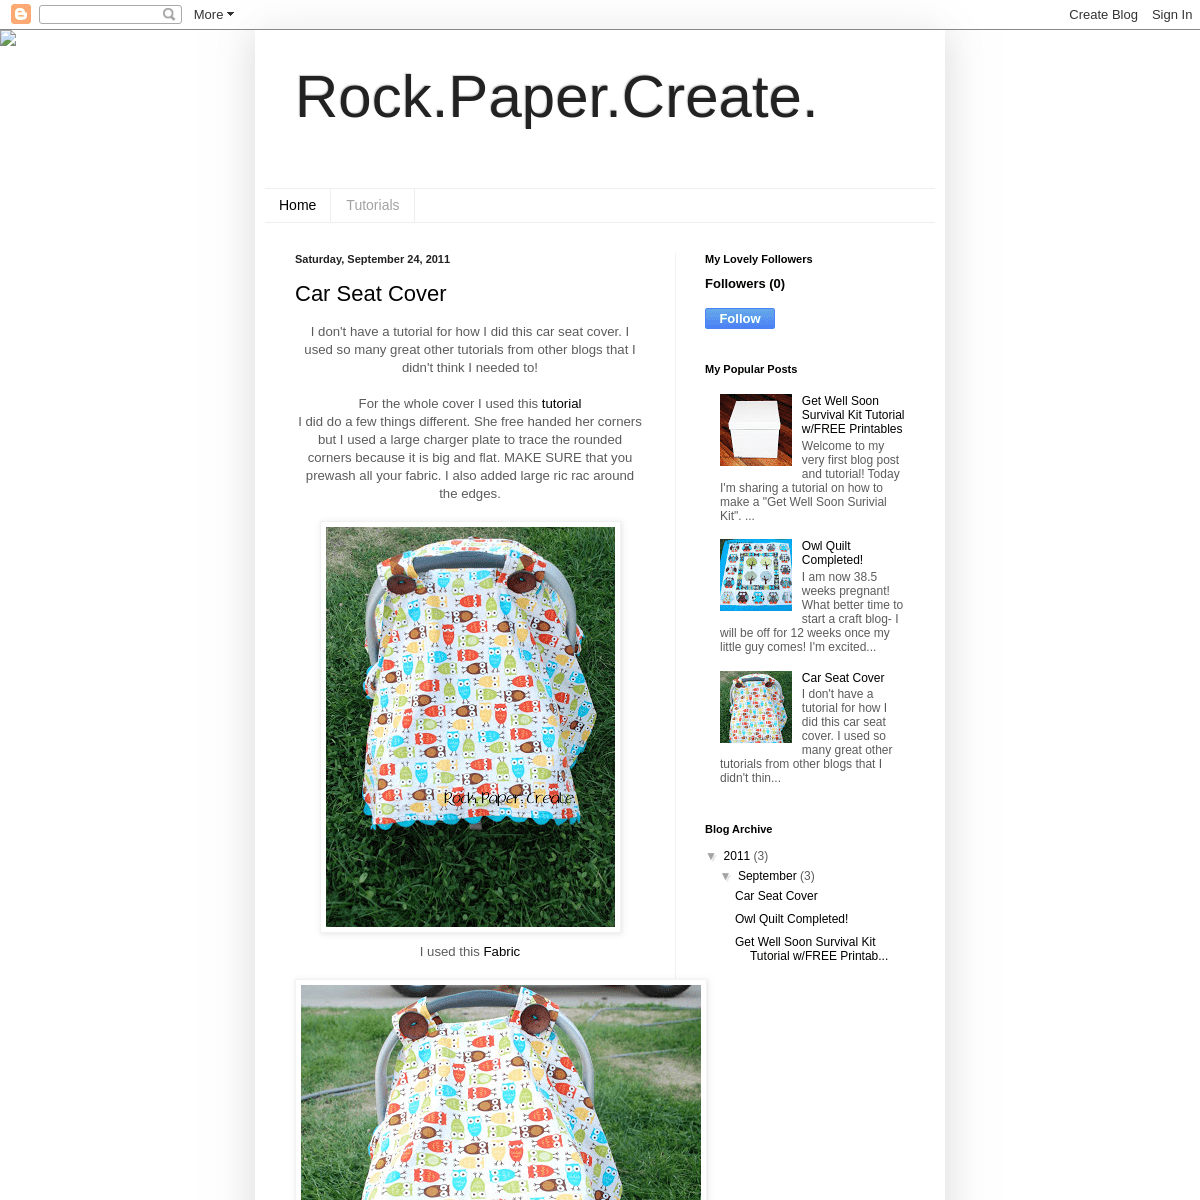 A complete backup of rockpapercreate.blogspot.com